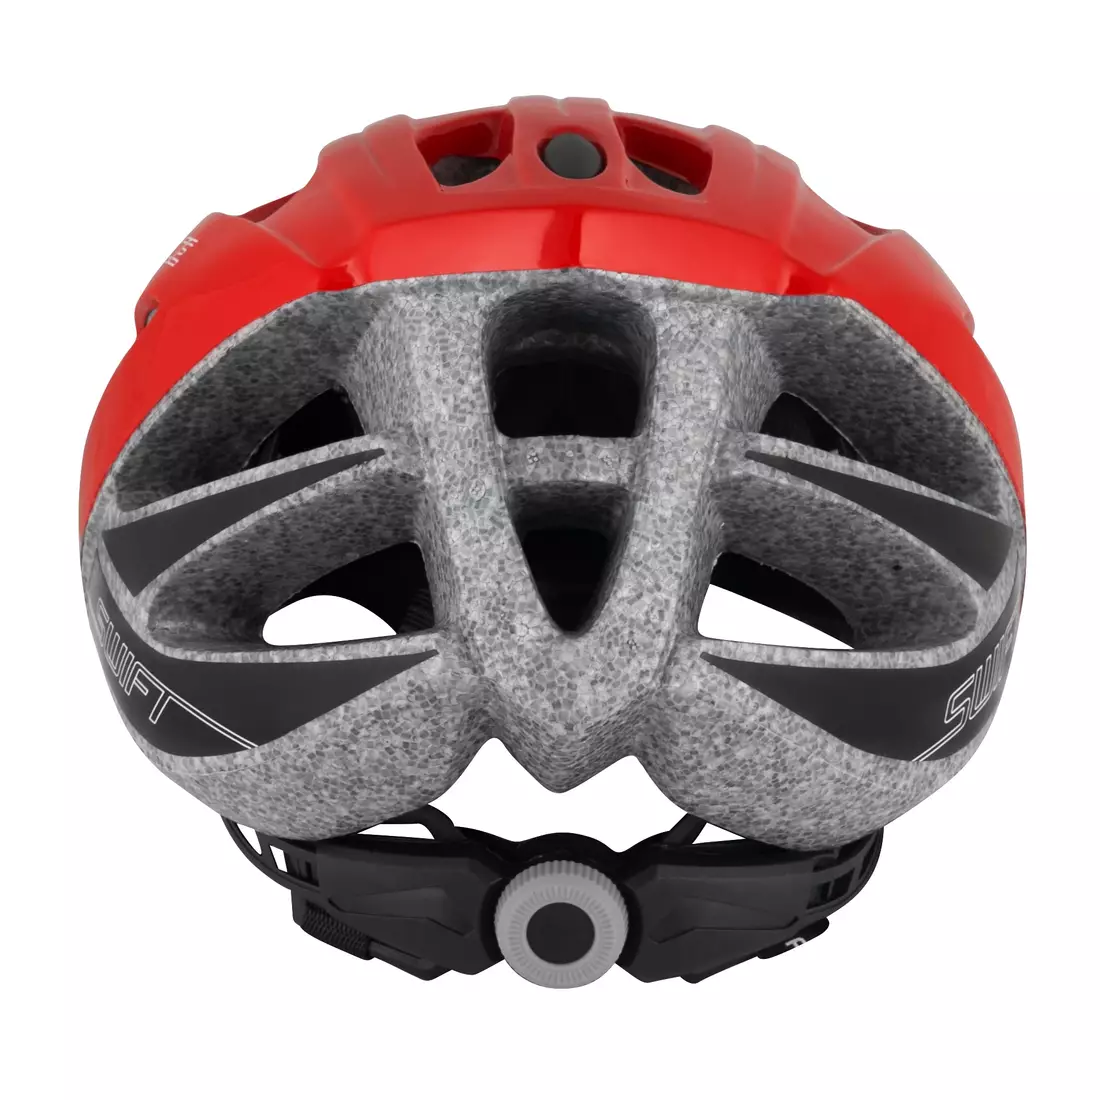 FORCE SWIFT Cyklistická helma red 902899